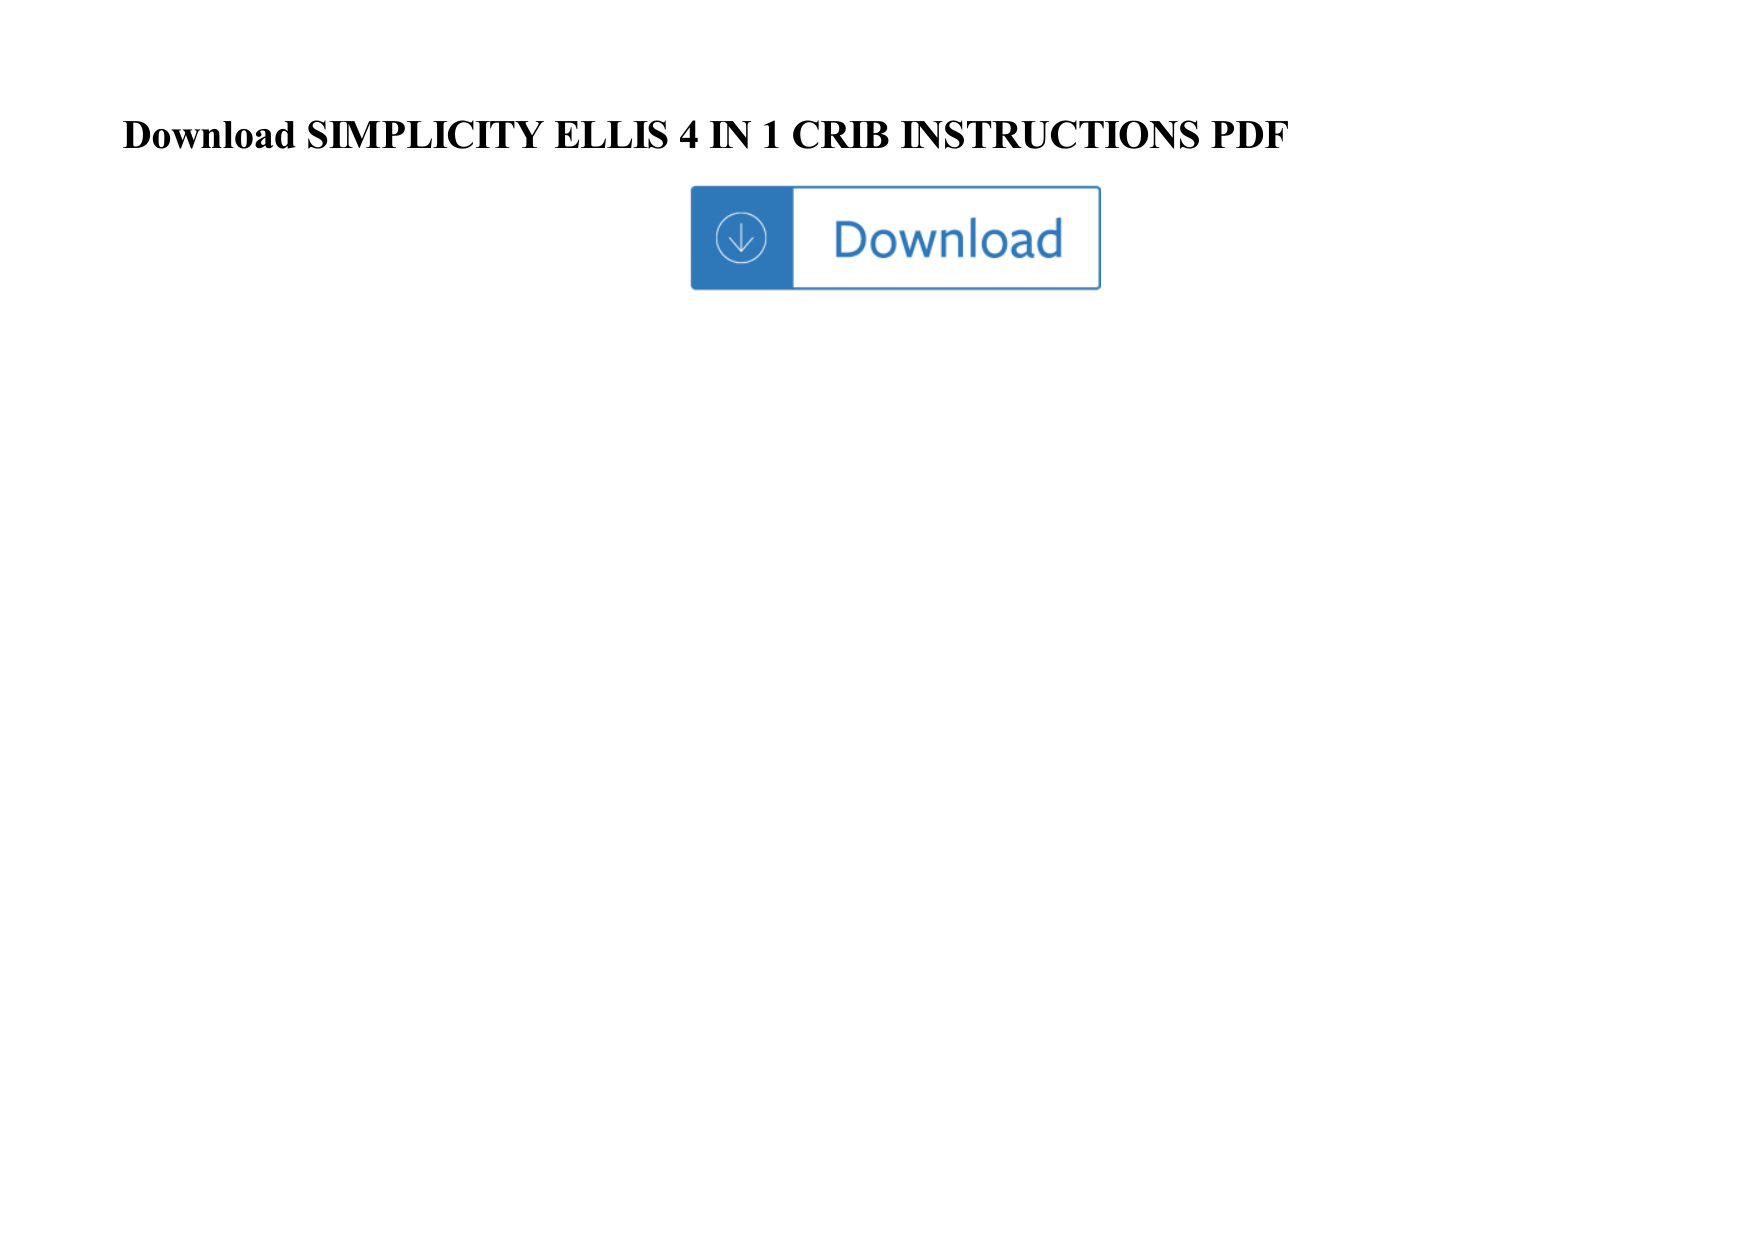 SIMPLICITY ELLIS 4 IN 1 CRIB INSTRUCTIONS PDF